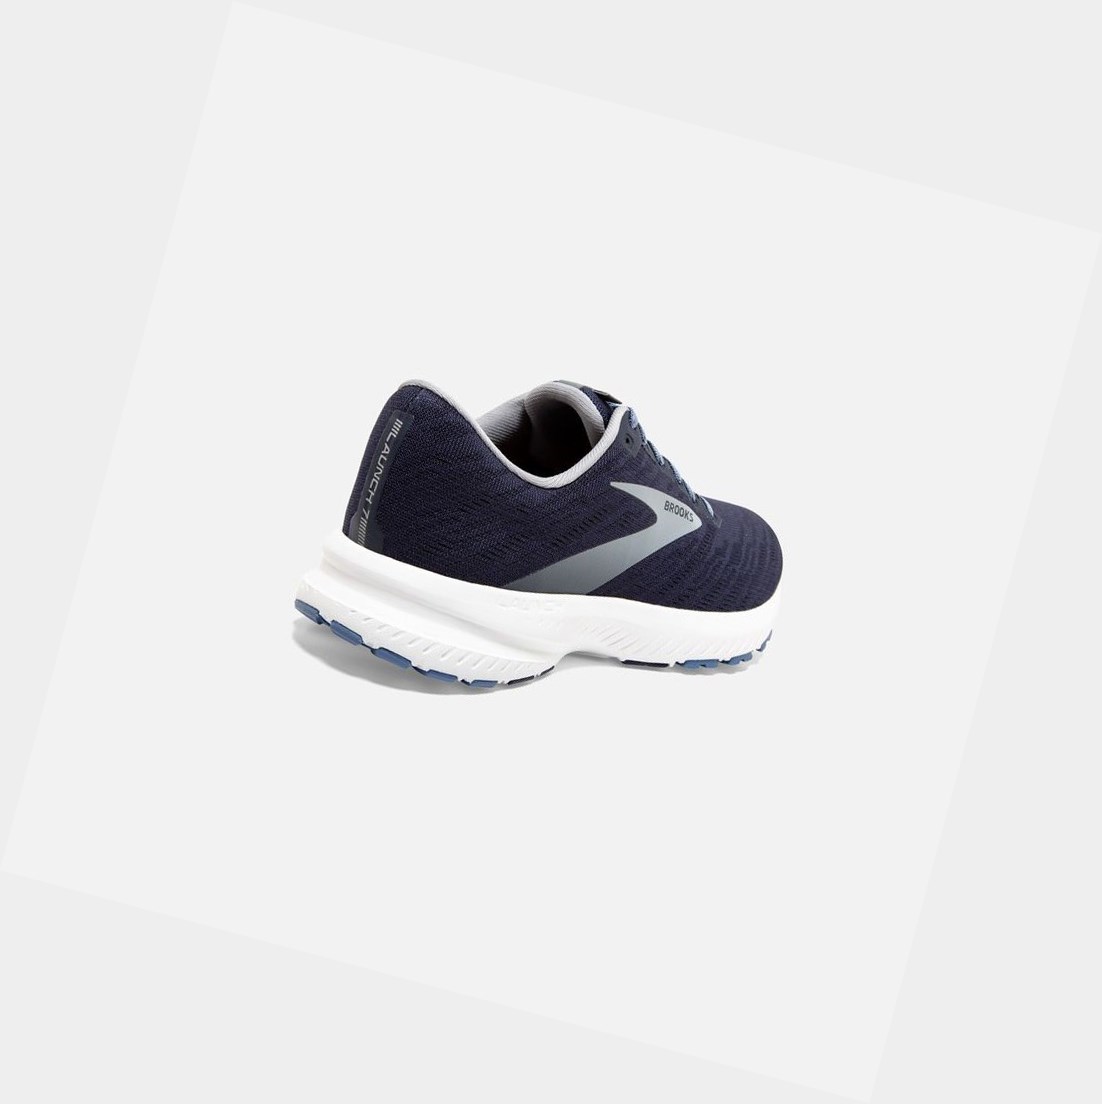 Brooks Launch 7 Men's Road Running Shoes Peacoat / Primer Grey / White | LXRY-71408